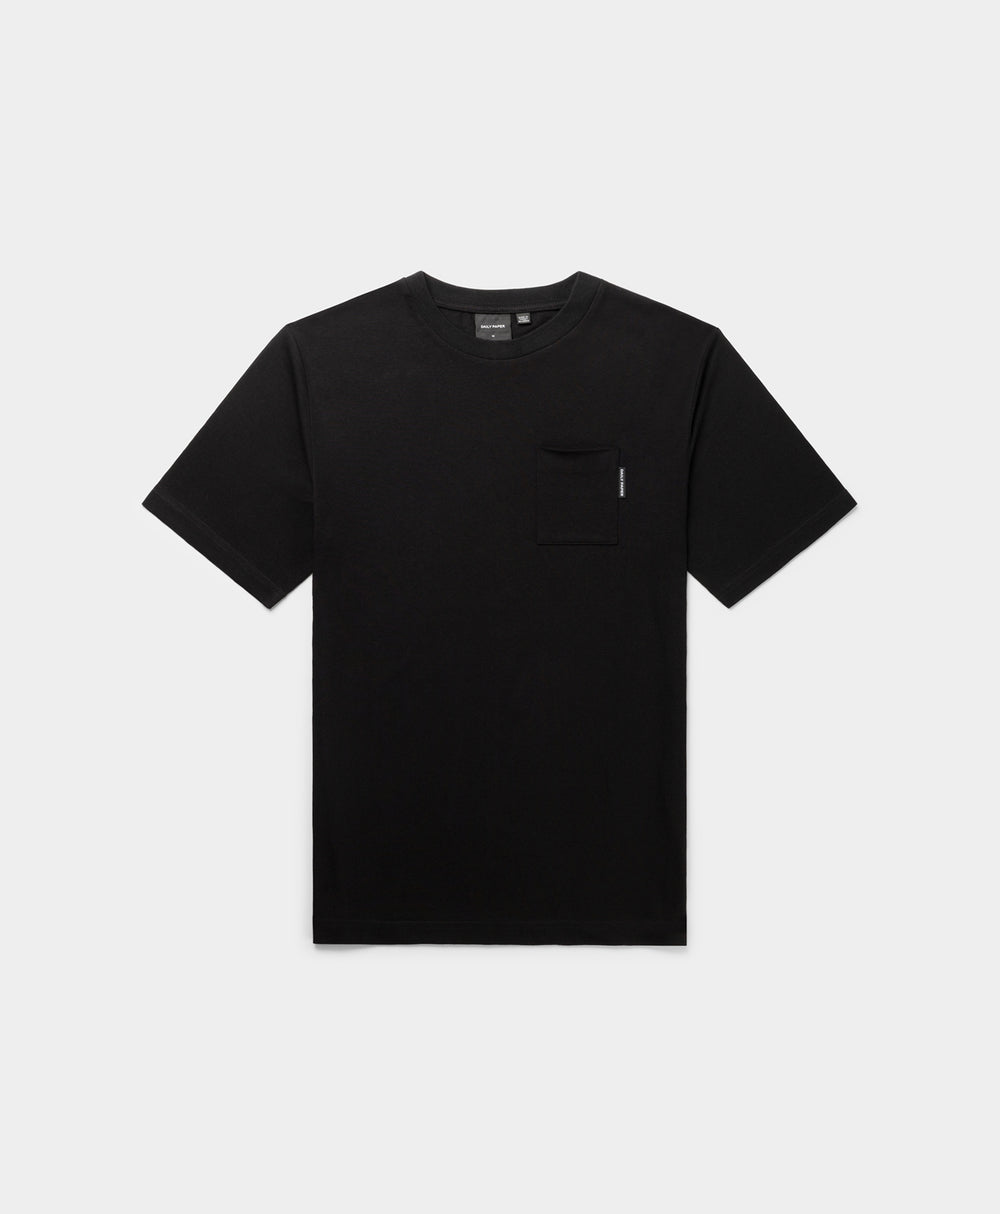 DP - Black Enjata T-Shirt - Packshot - Front